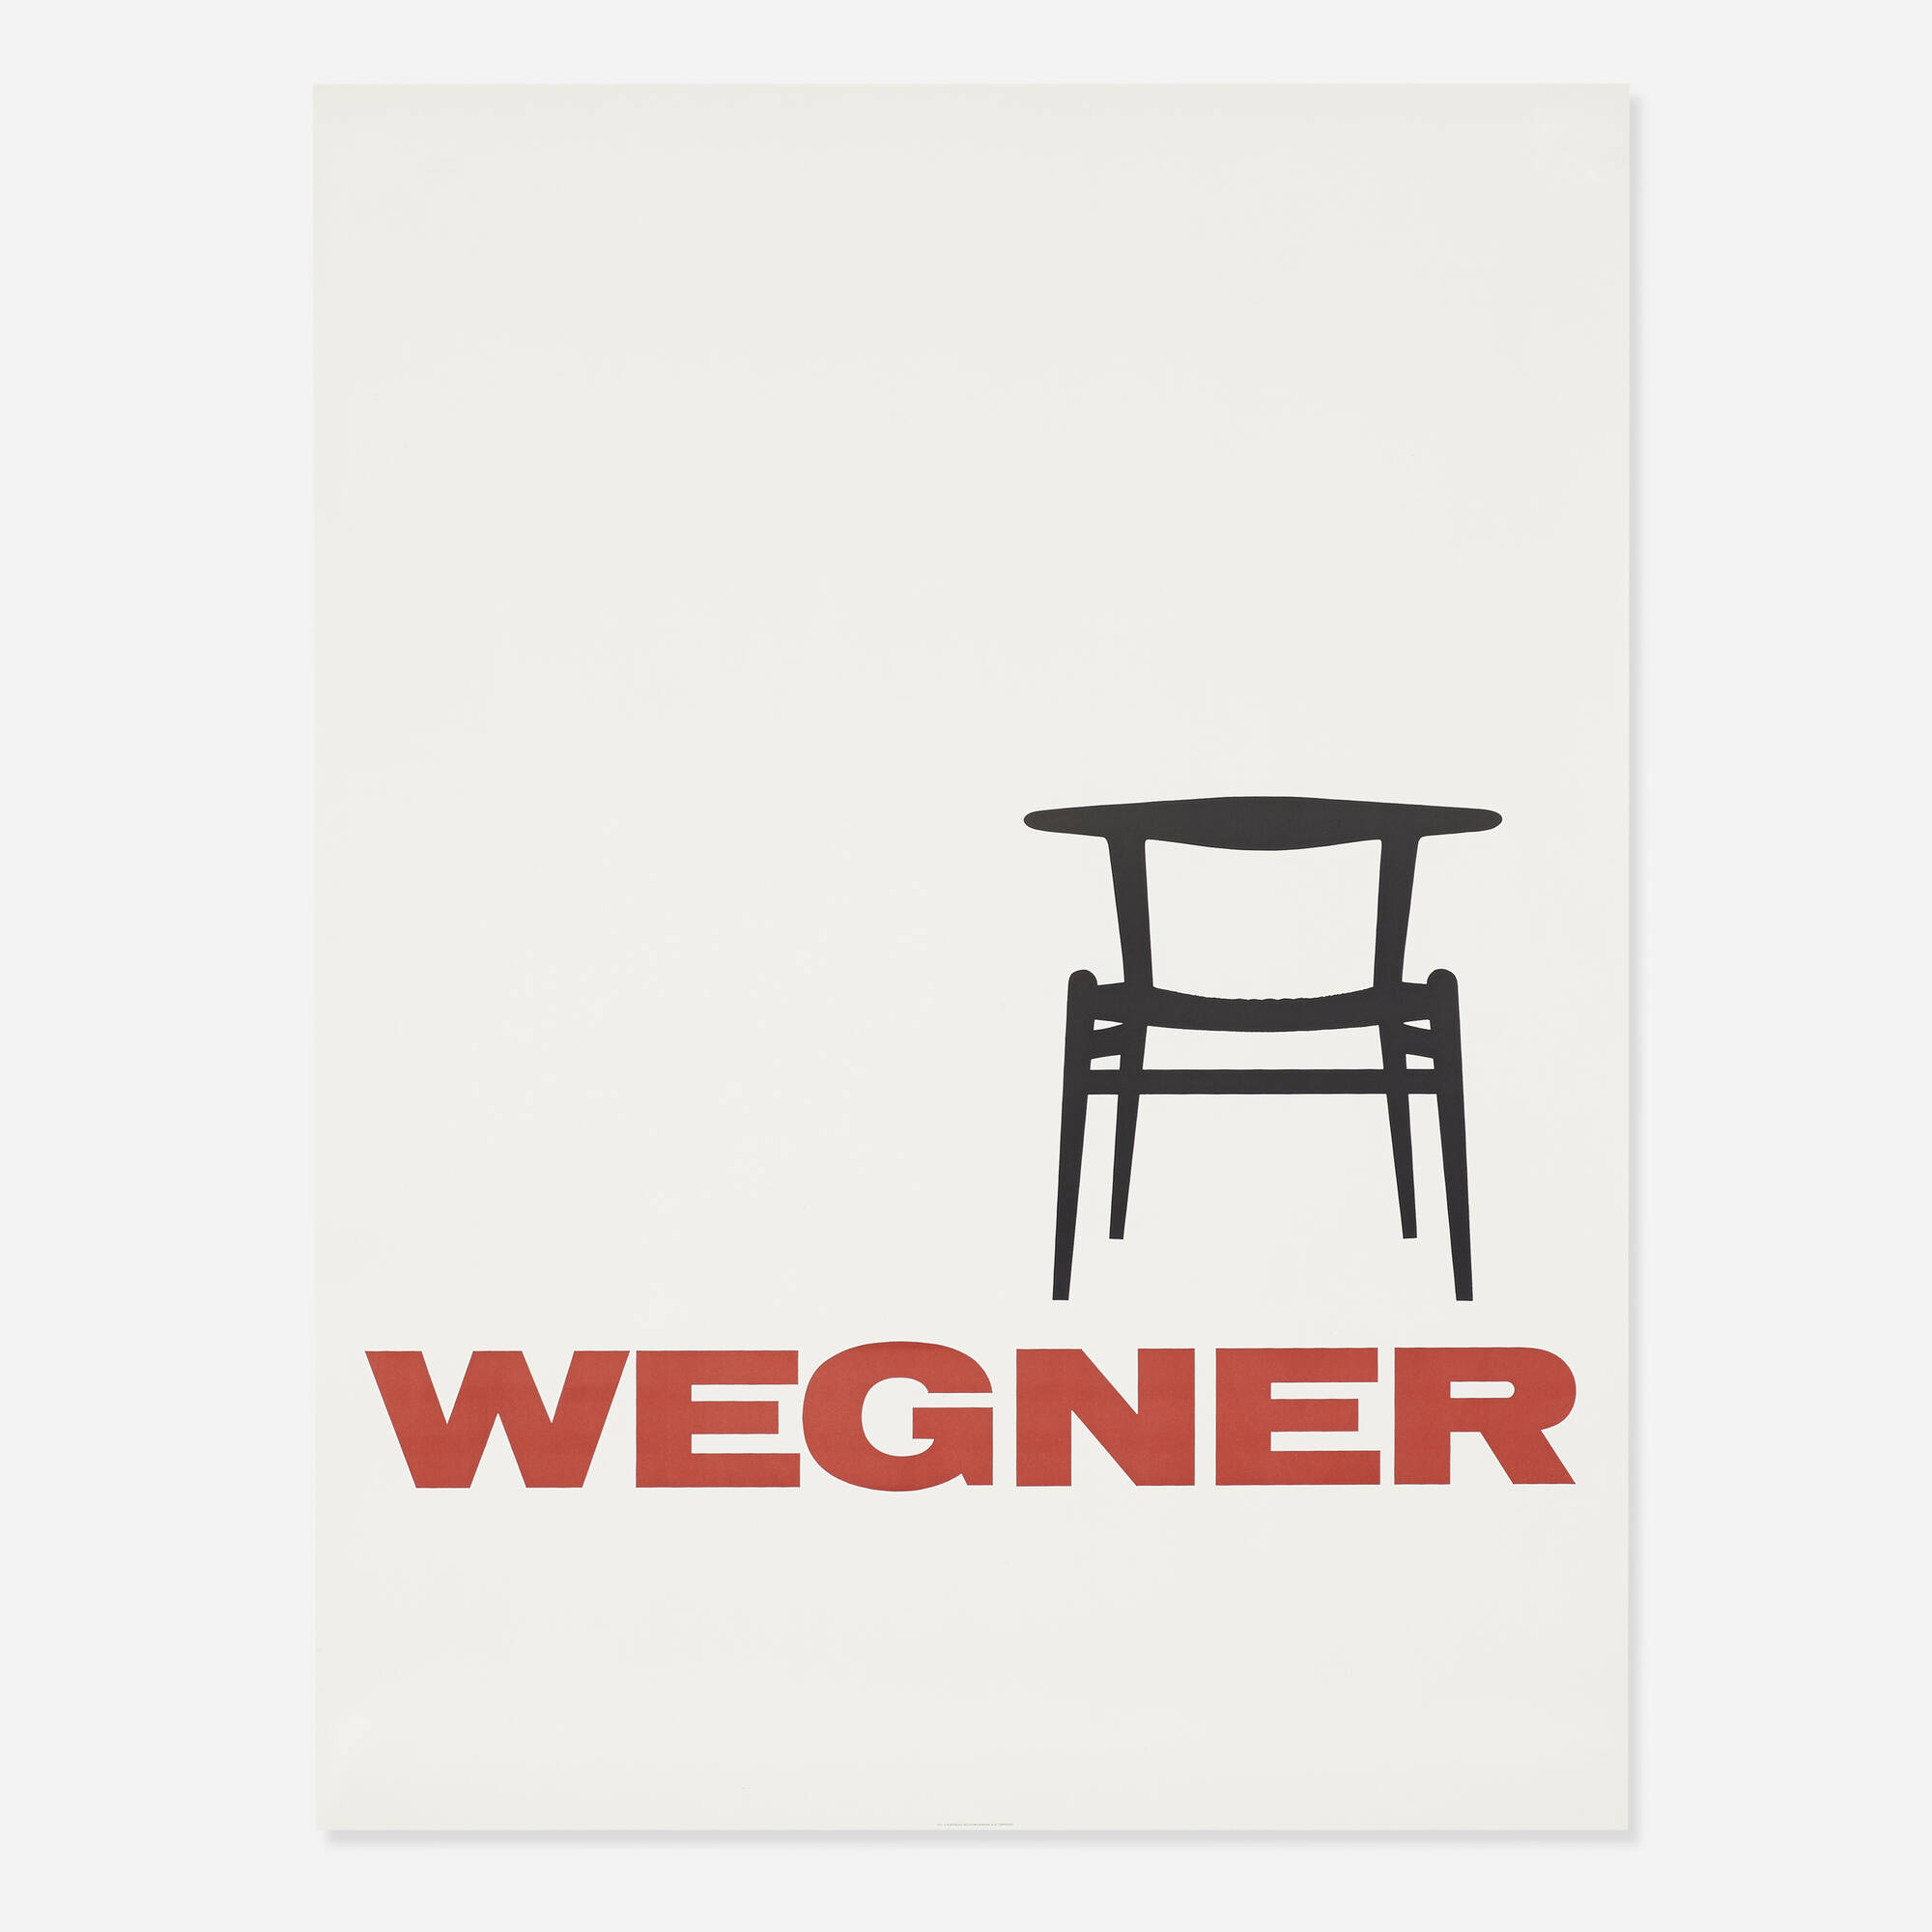 368: HANS J. WEGNER, poster < Scandinavian Design, 8 May < Auctions | Wright: of Art and Design